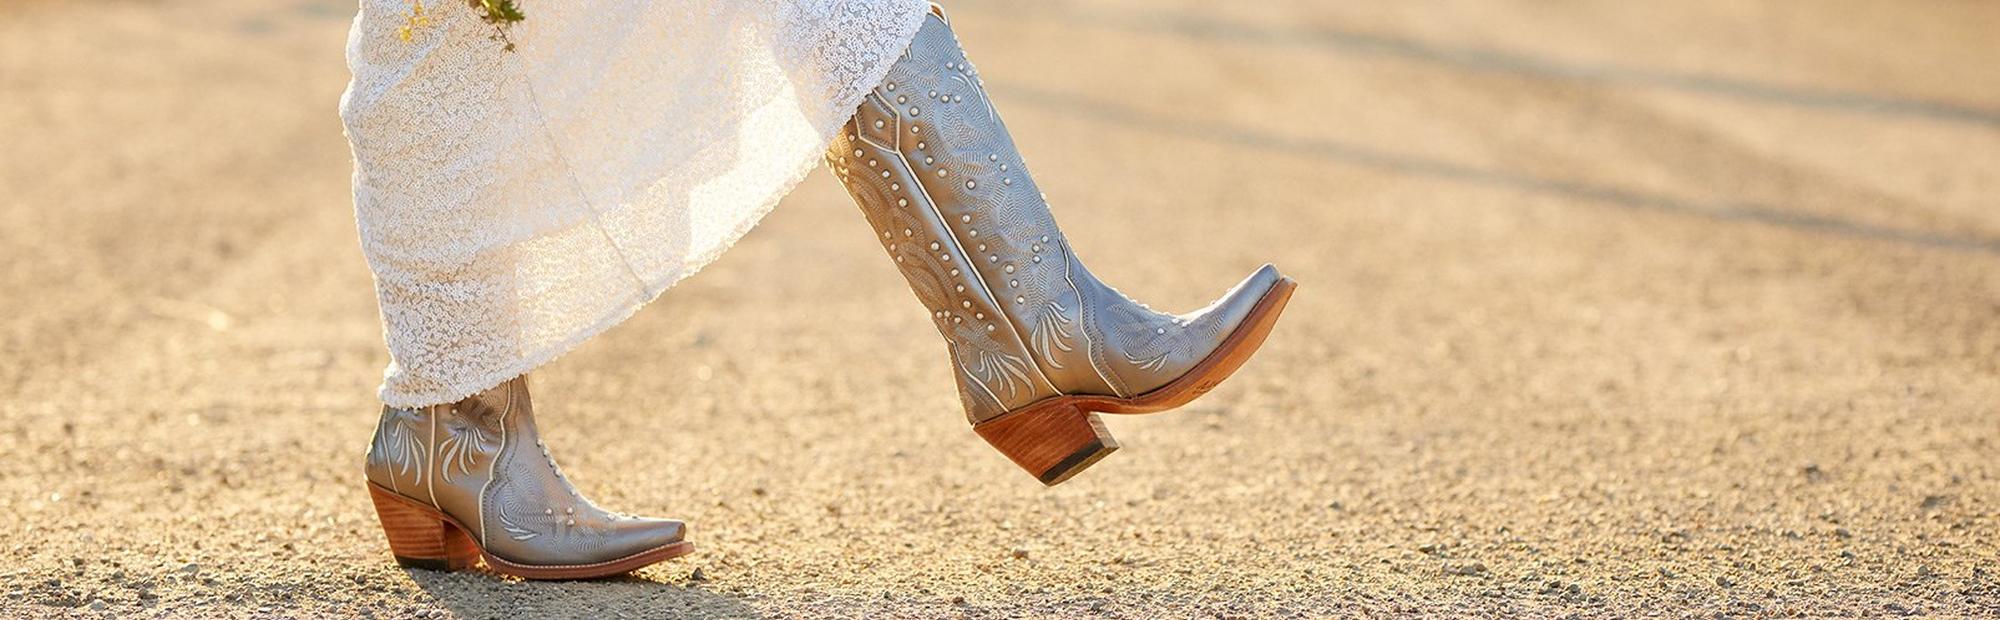 23 Western Wedding Guest Dresses You'll Love